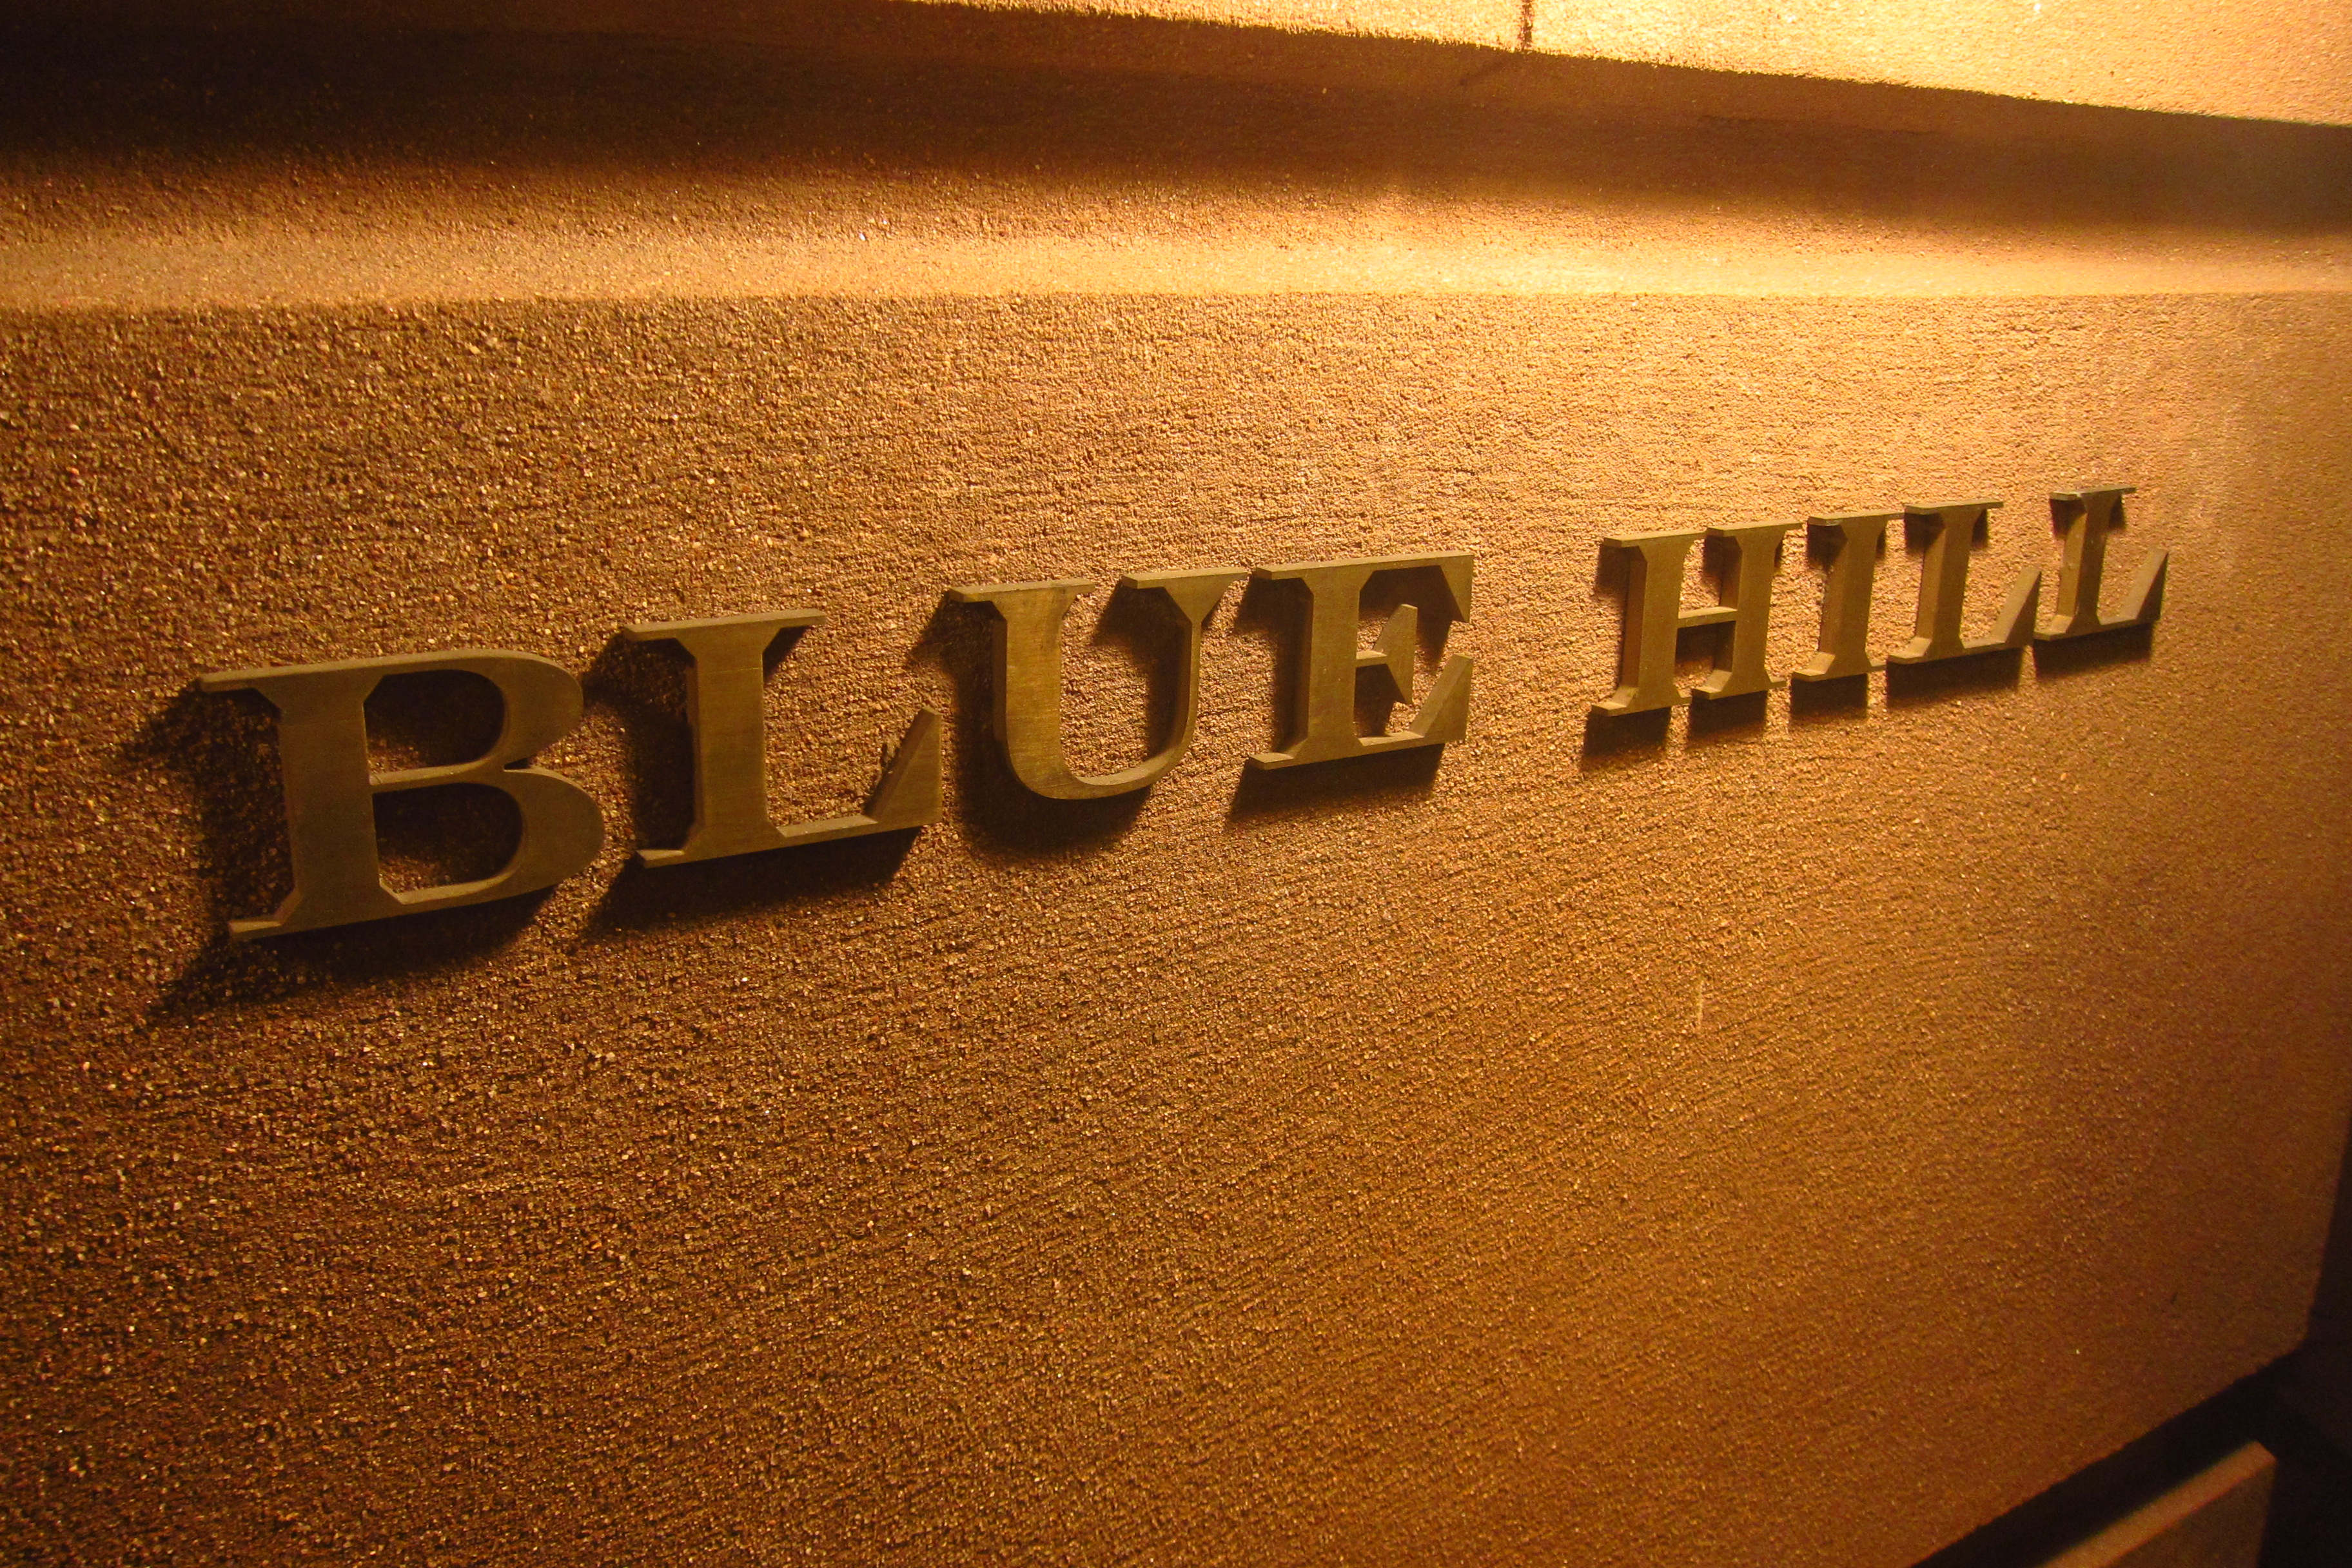 Blue Hill 